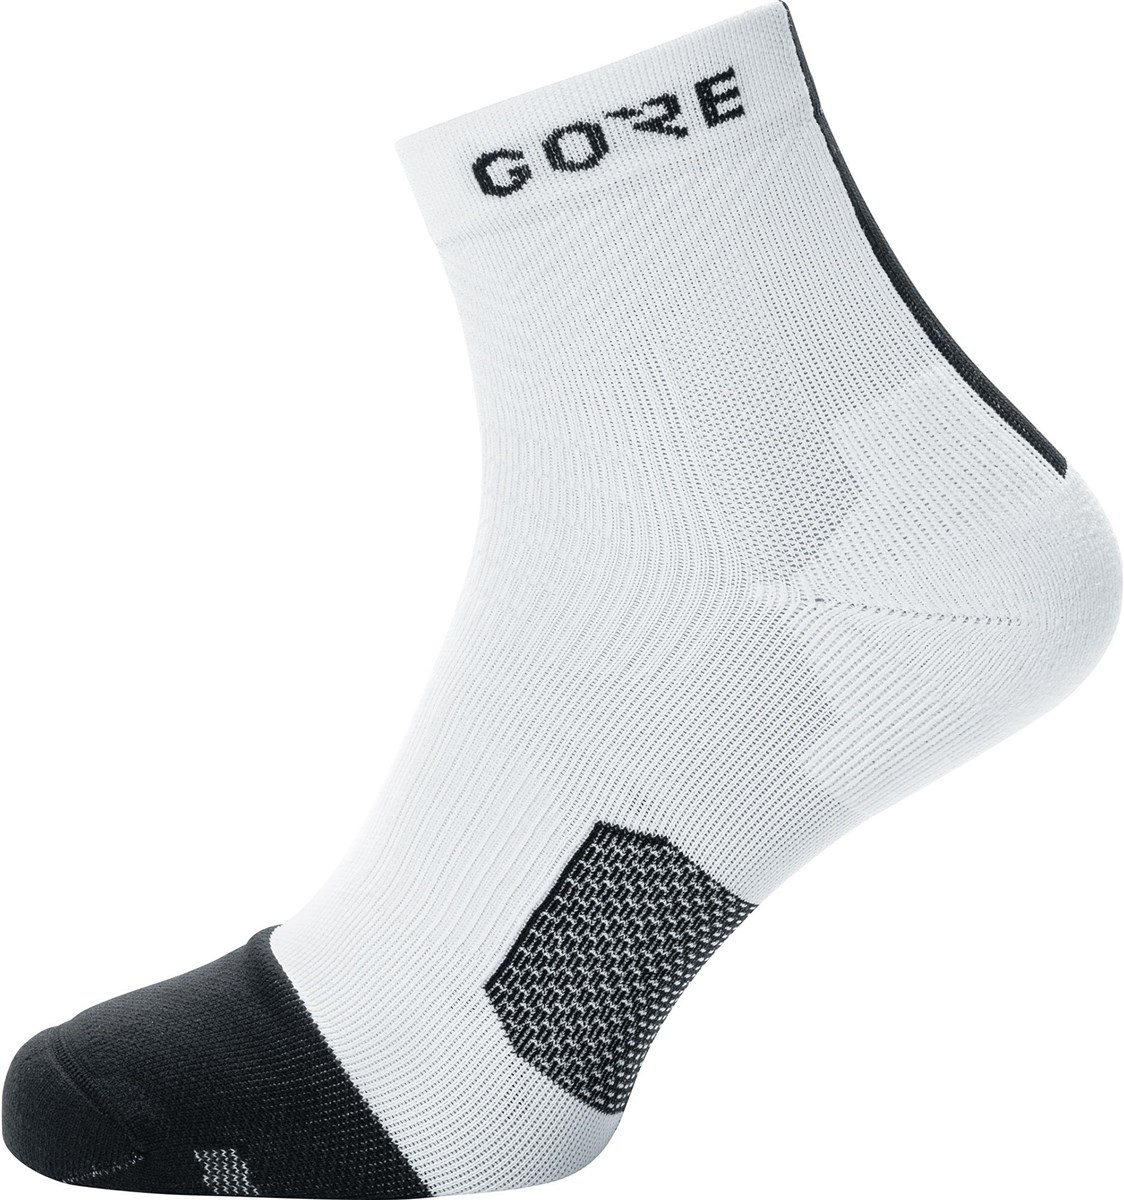 Gore R7 Mid Socks product image